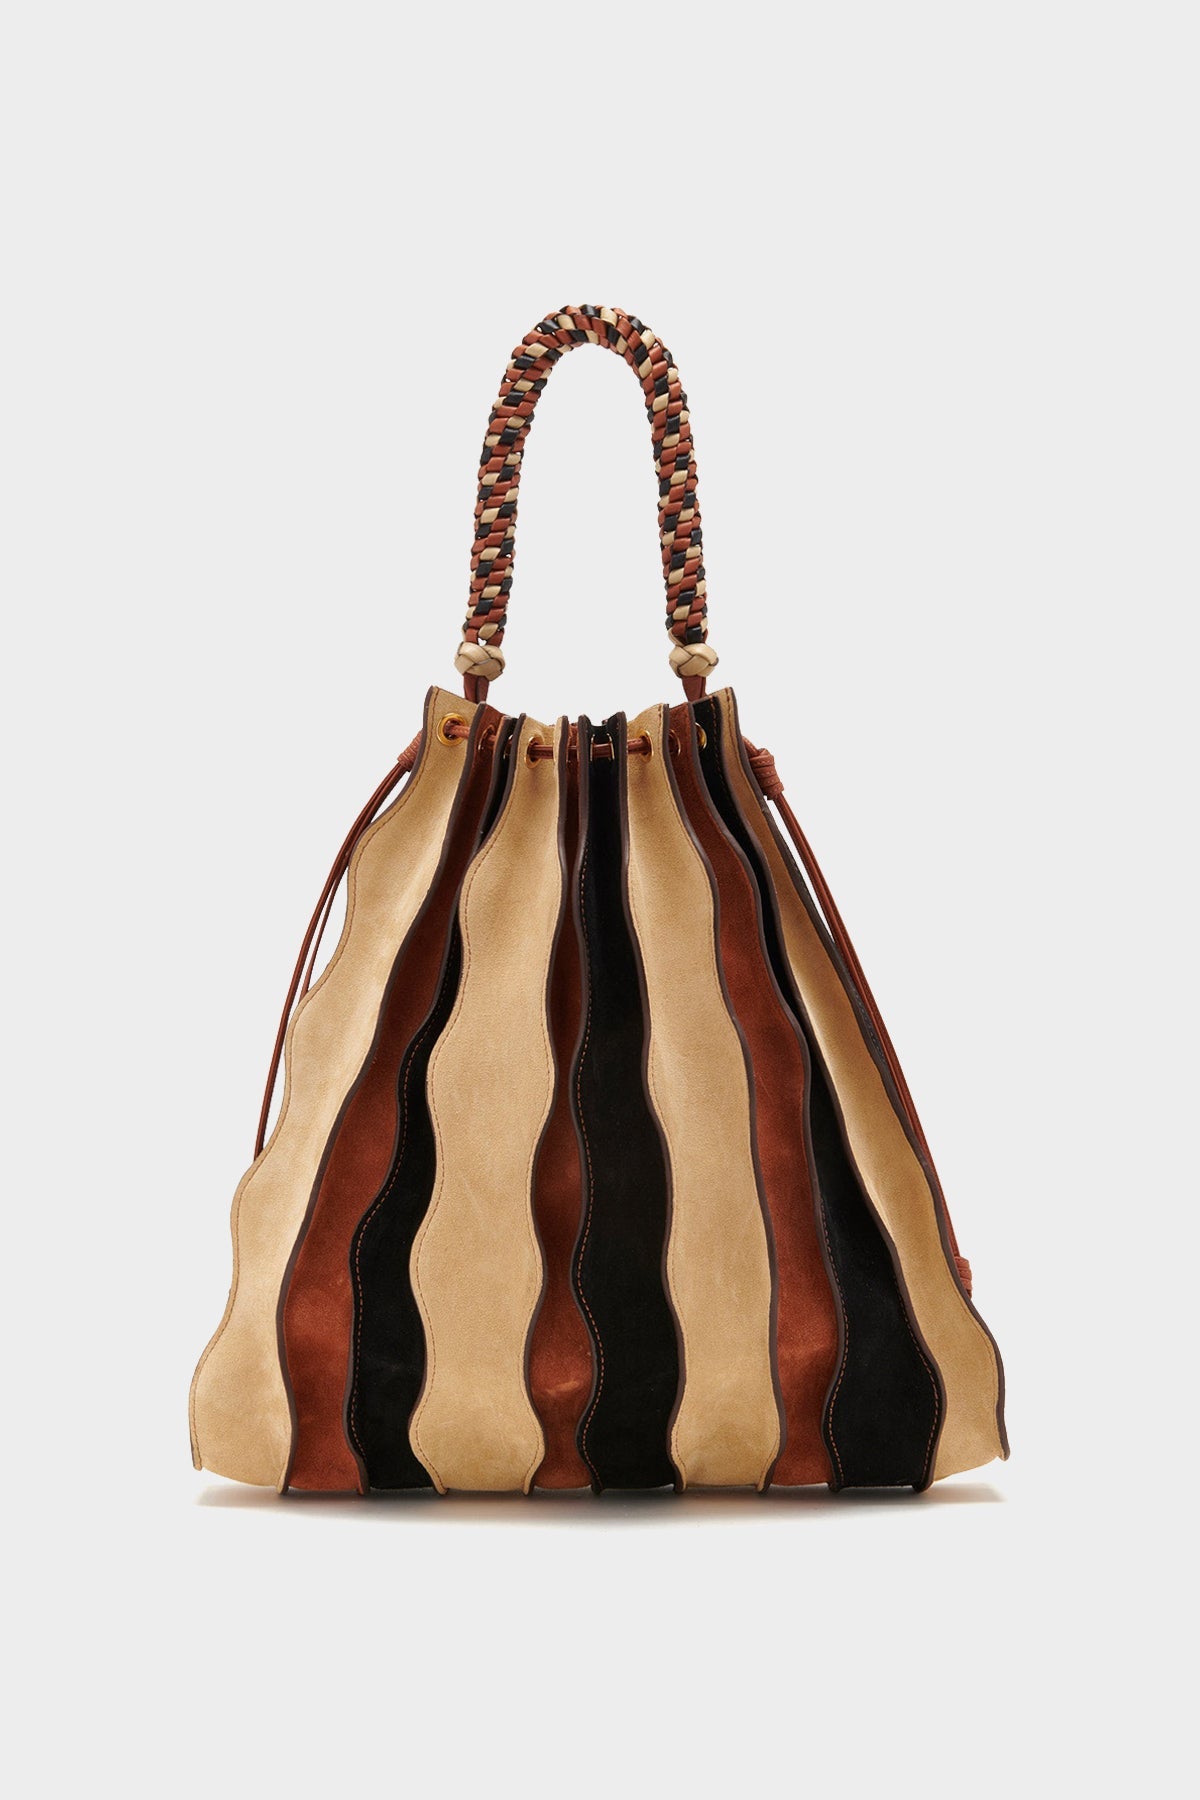 Adria Large Pleated Wave Bag in Dune Colorblock - shop-olivia.com